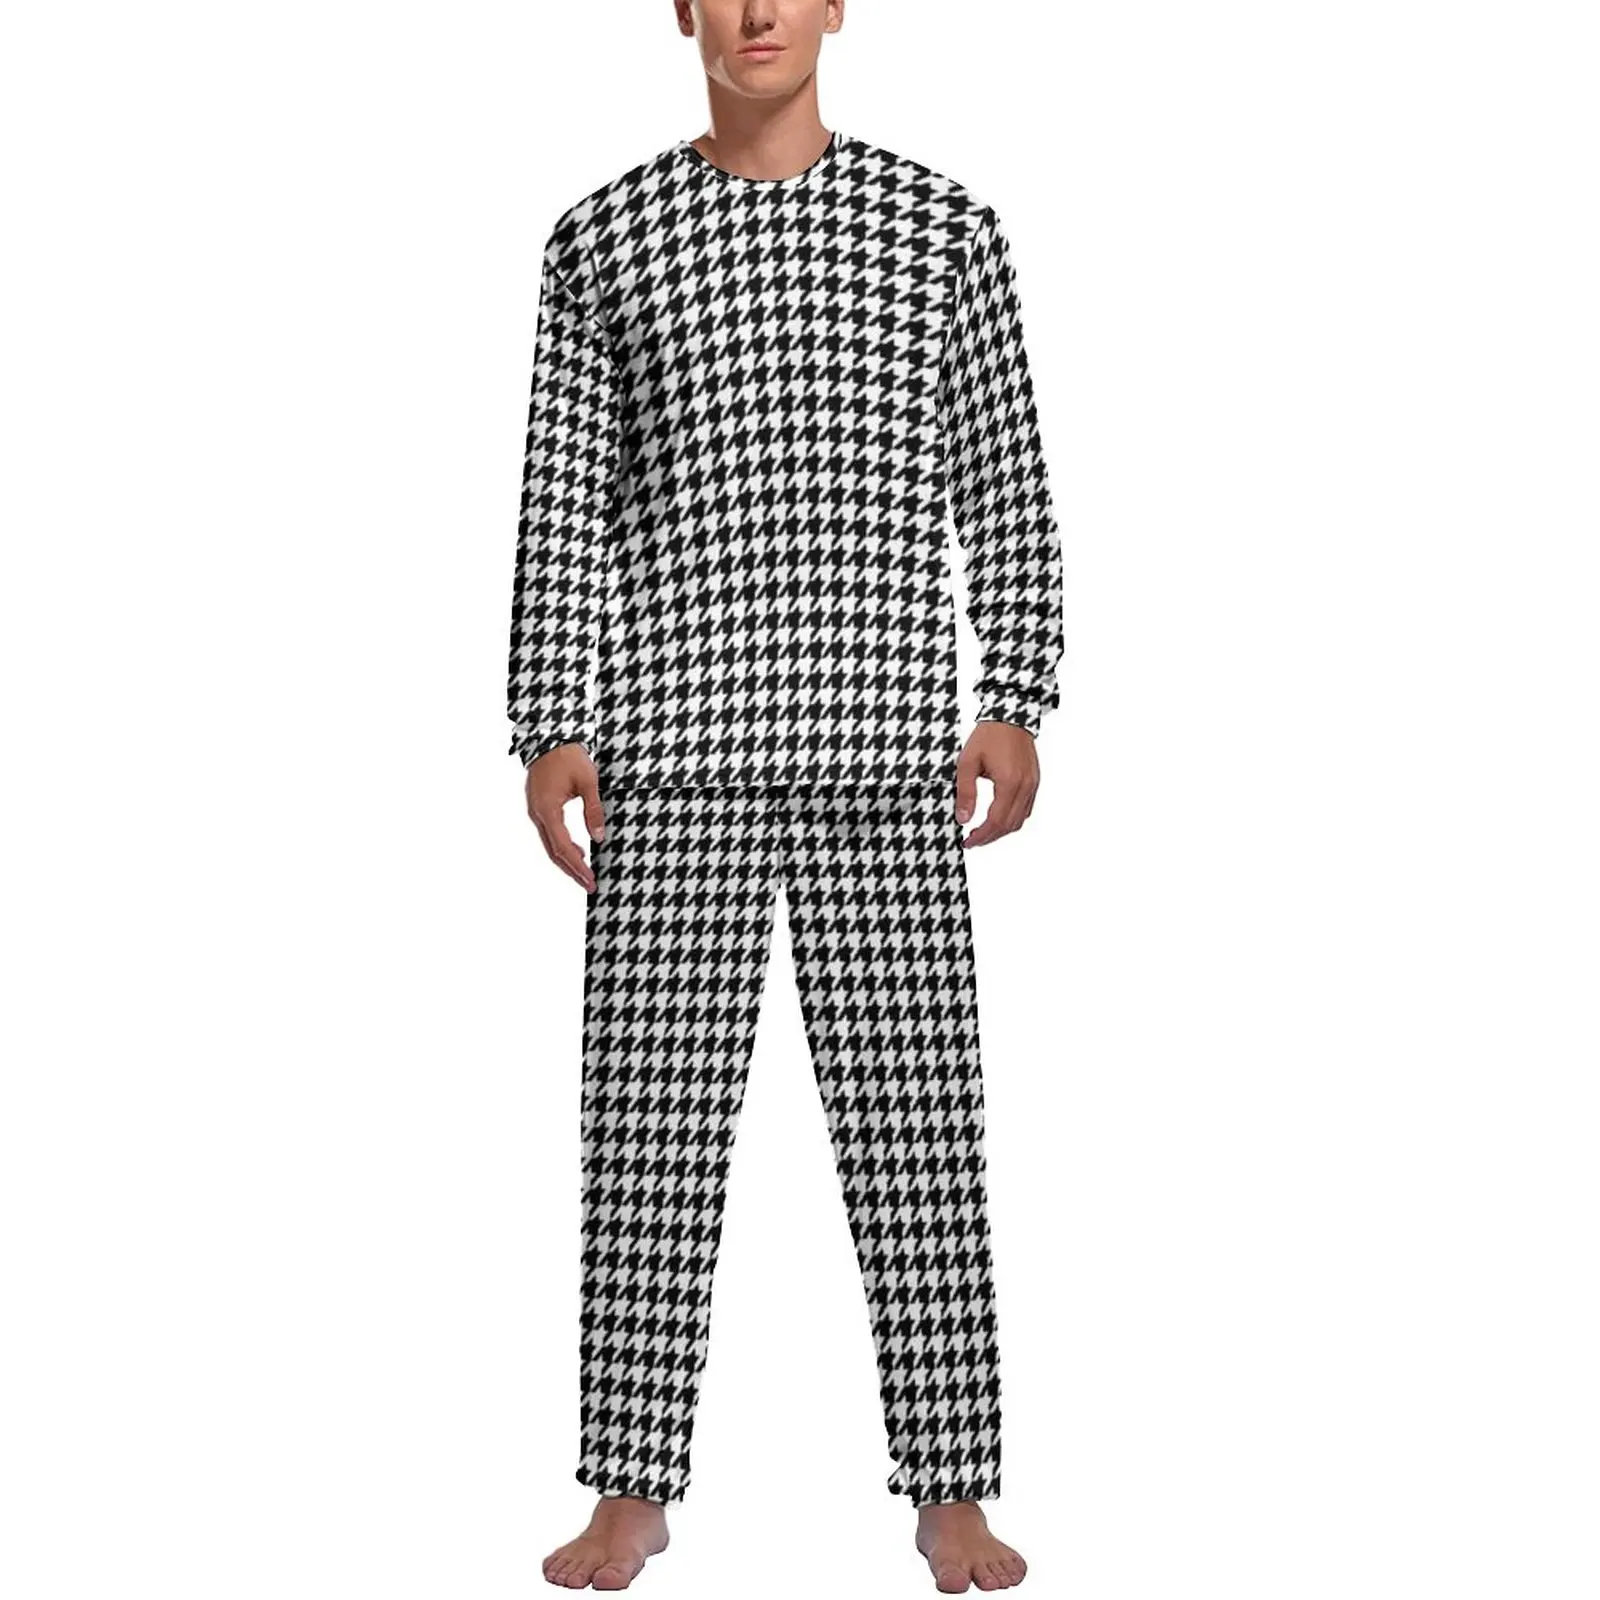 Elegant Houndstooth Pajamas Winter Two Piece Black and White Retro Cute Pajamas Set Men Long Sleeve Casual Design Home Suit